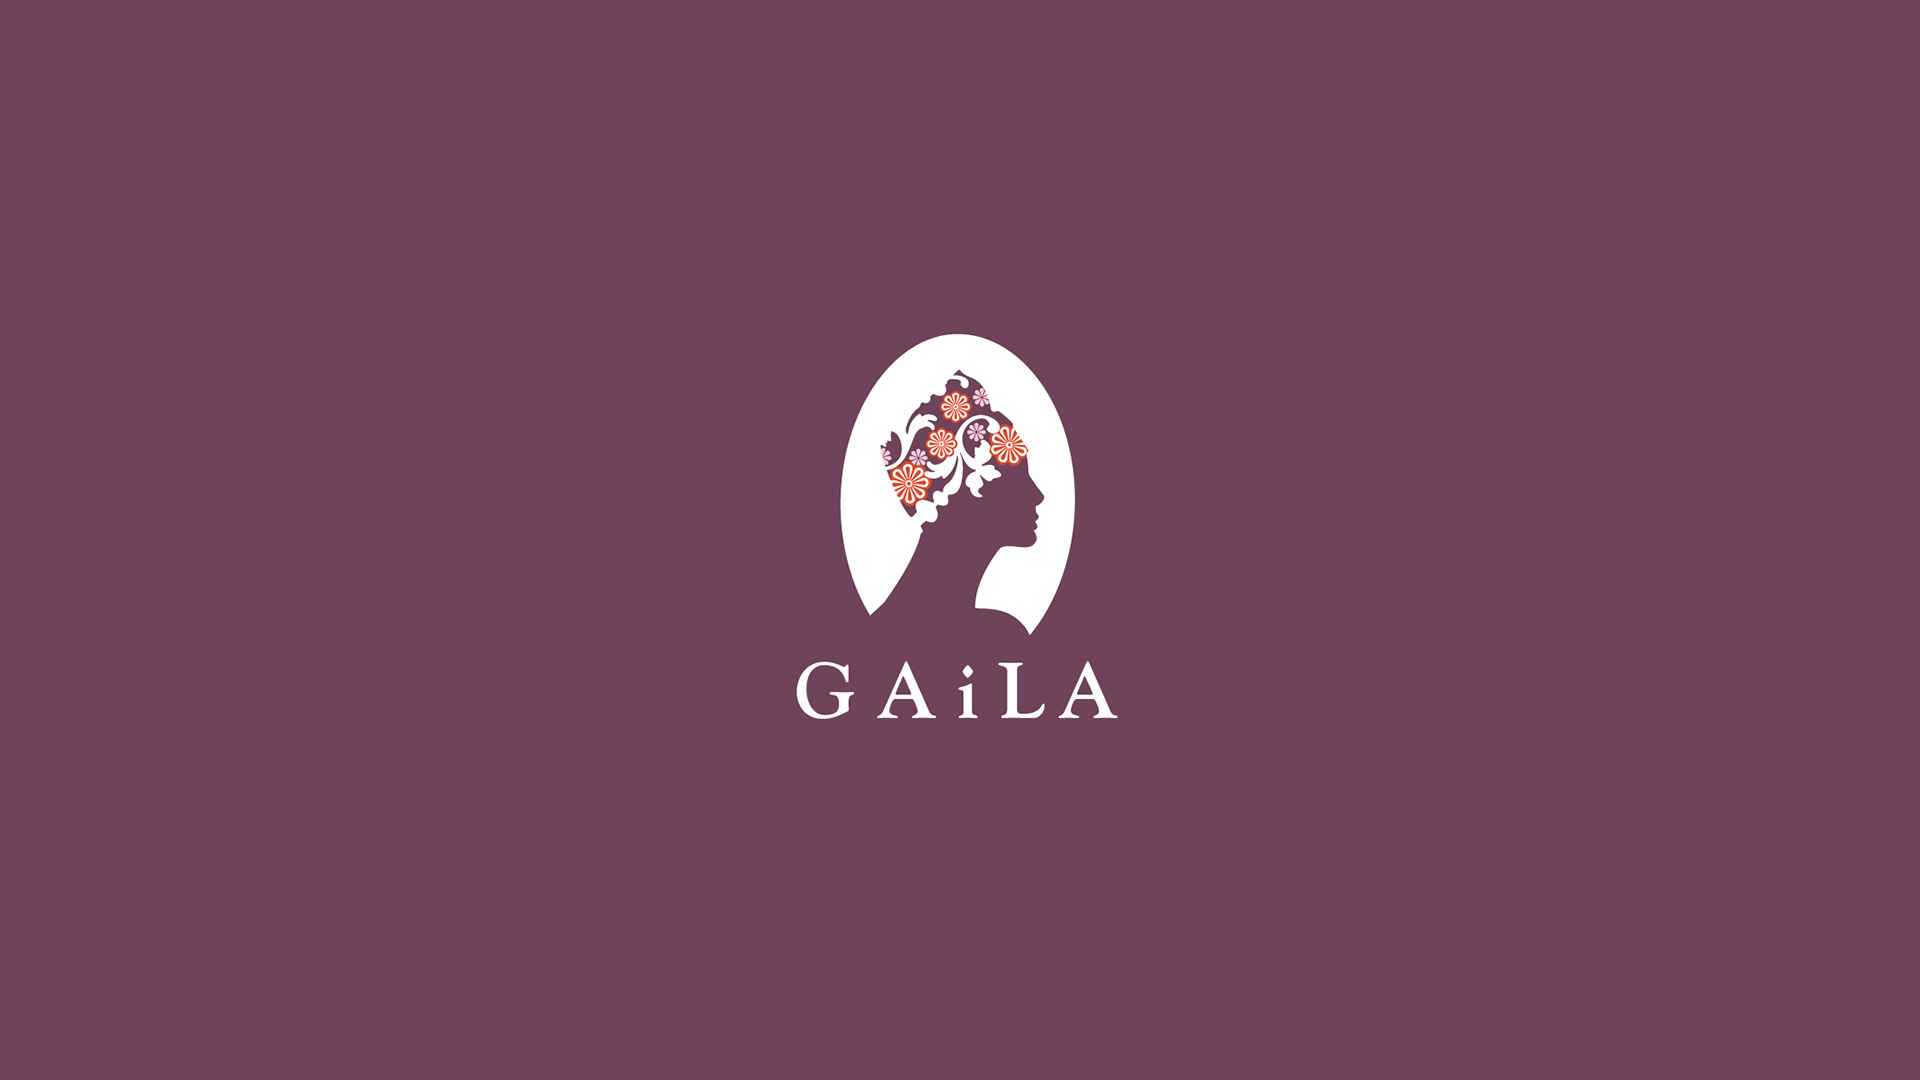 gaila logo on purple